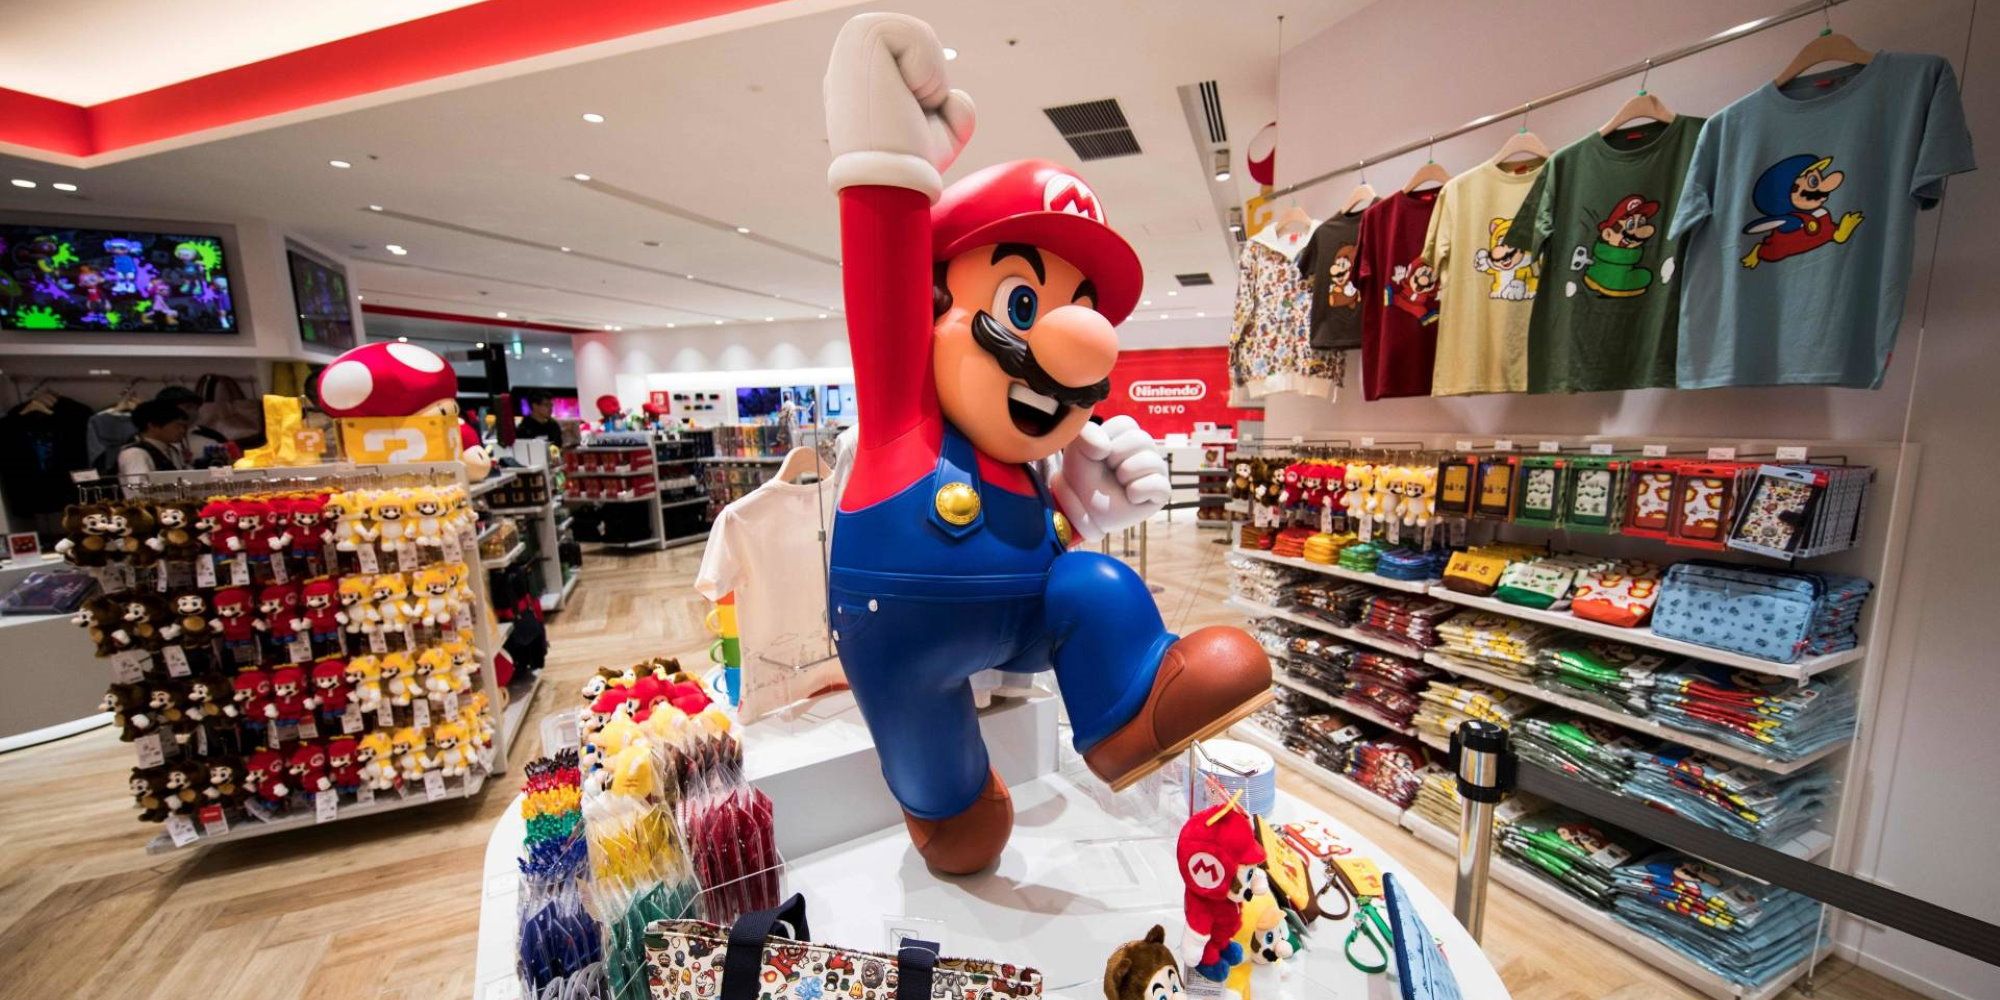 Second Nintendo Store Set In Japan